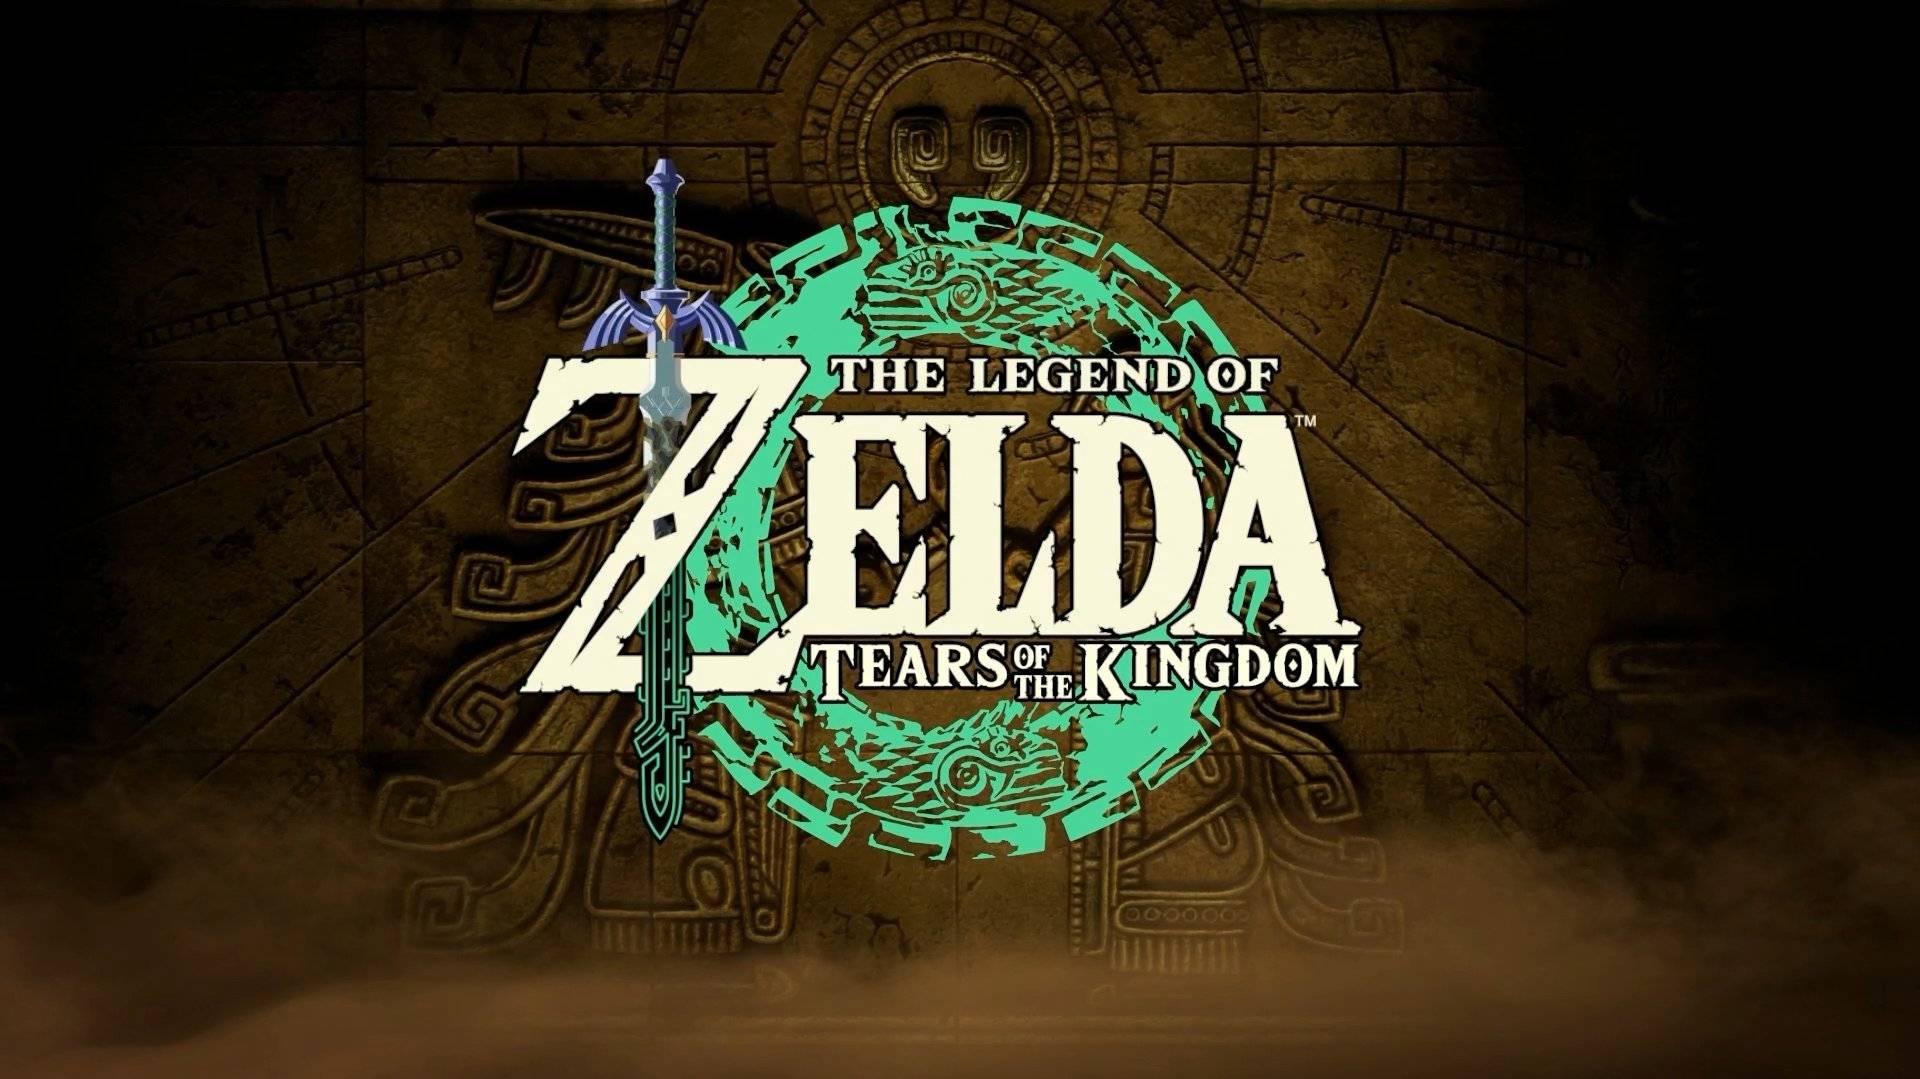 The Legend of Zelda Tears Of The Kingdom Release Date CONFIRMED